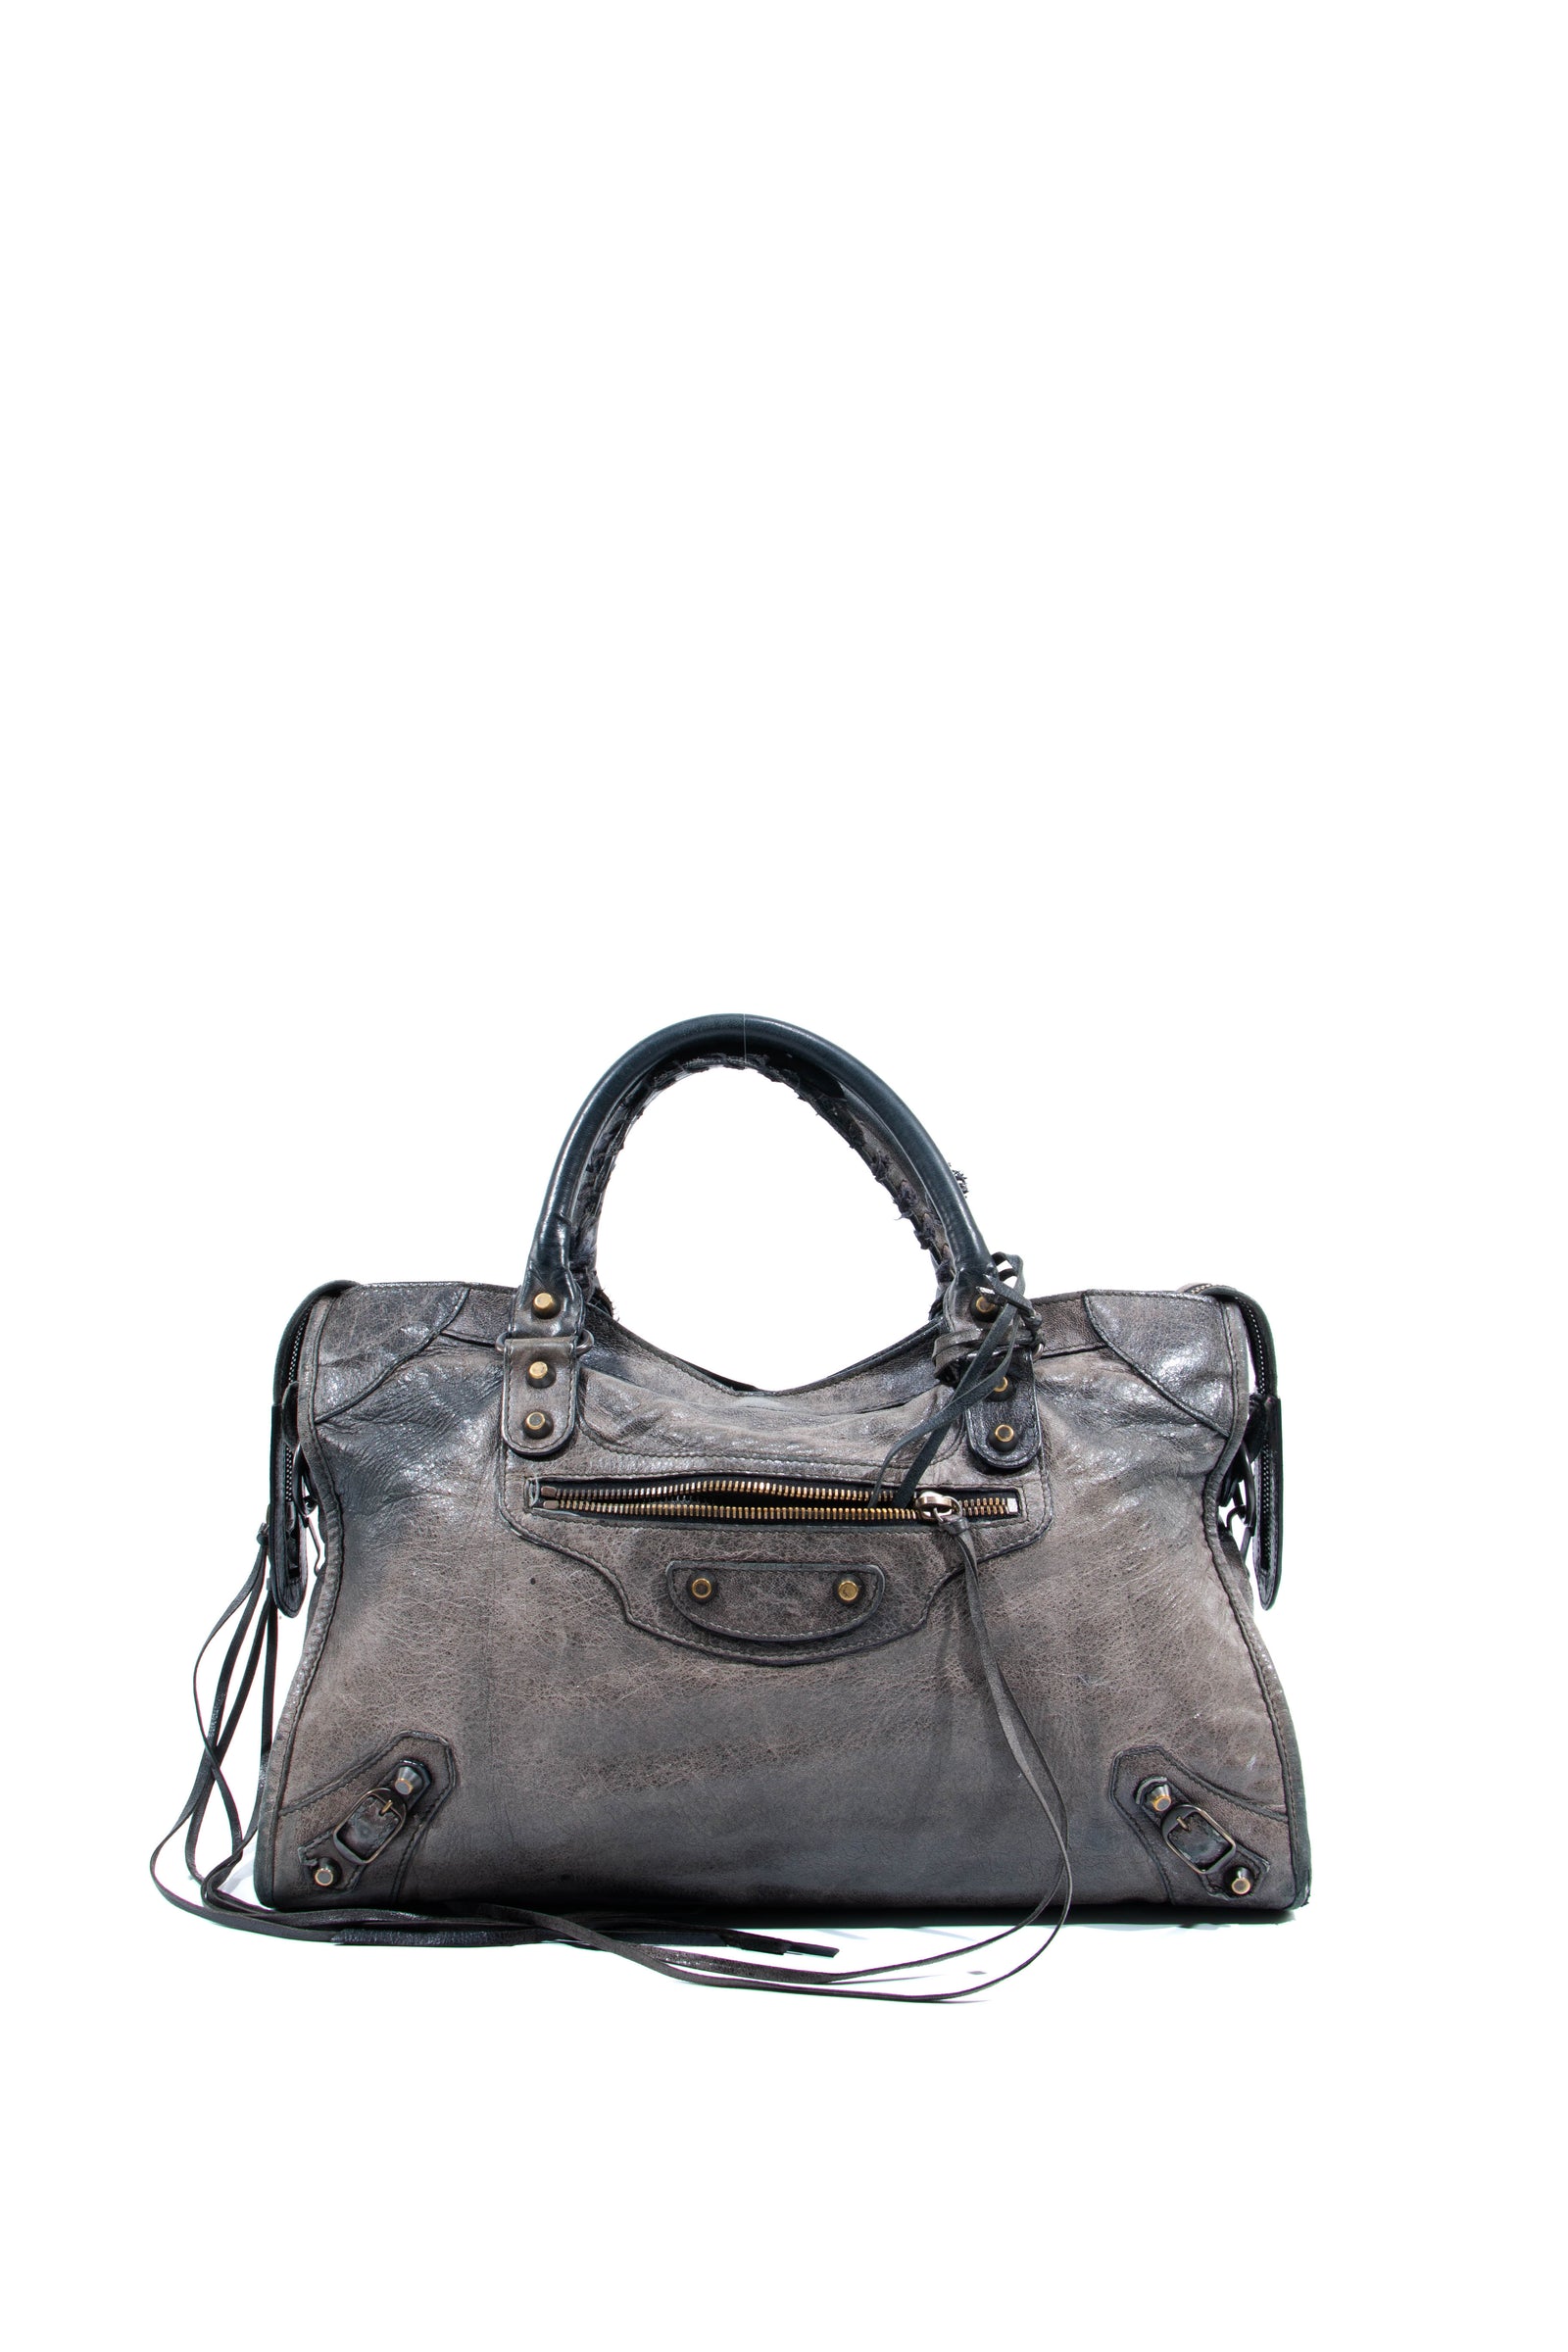 Balenciaga - Authenticated City Handbag - Leather Black for Women, Very Good Condition